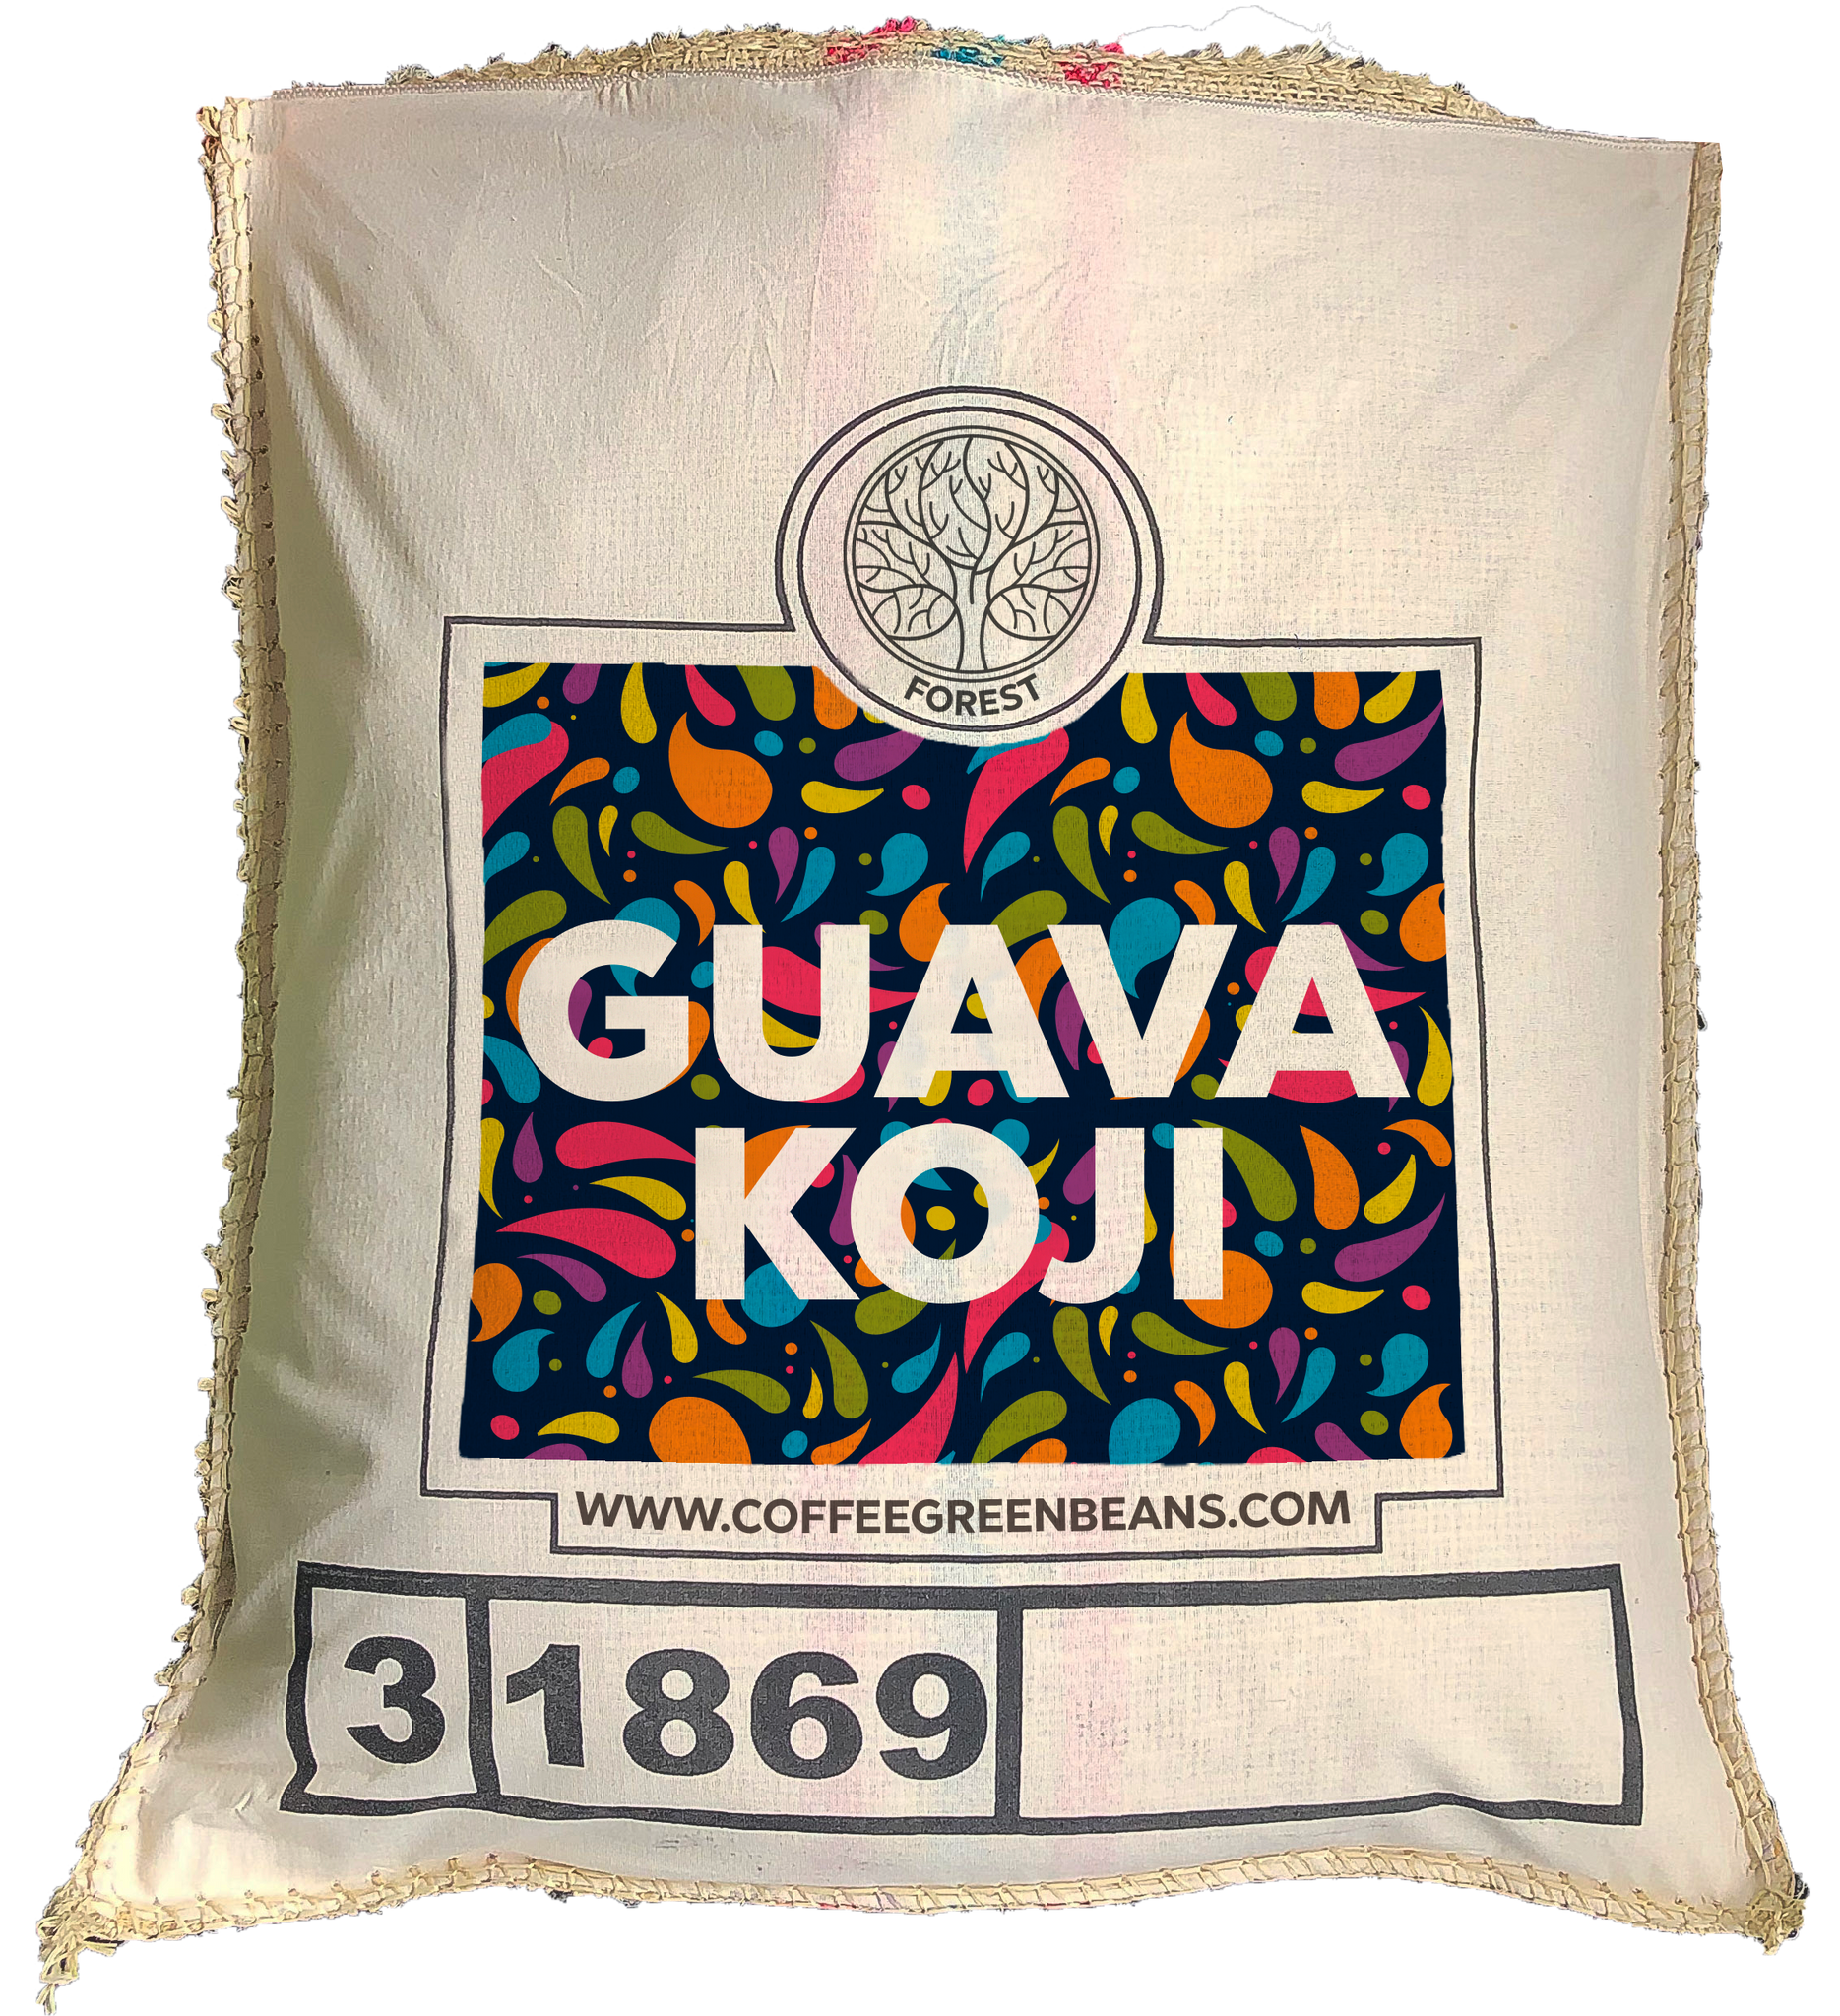 GUAVA KOJI - Forest Coffee 